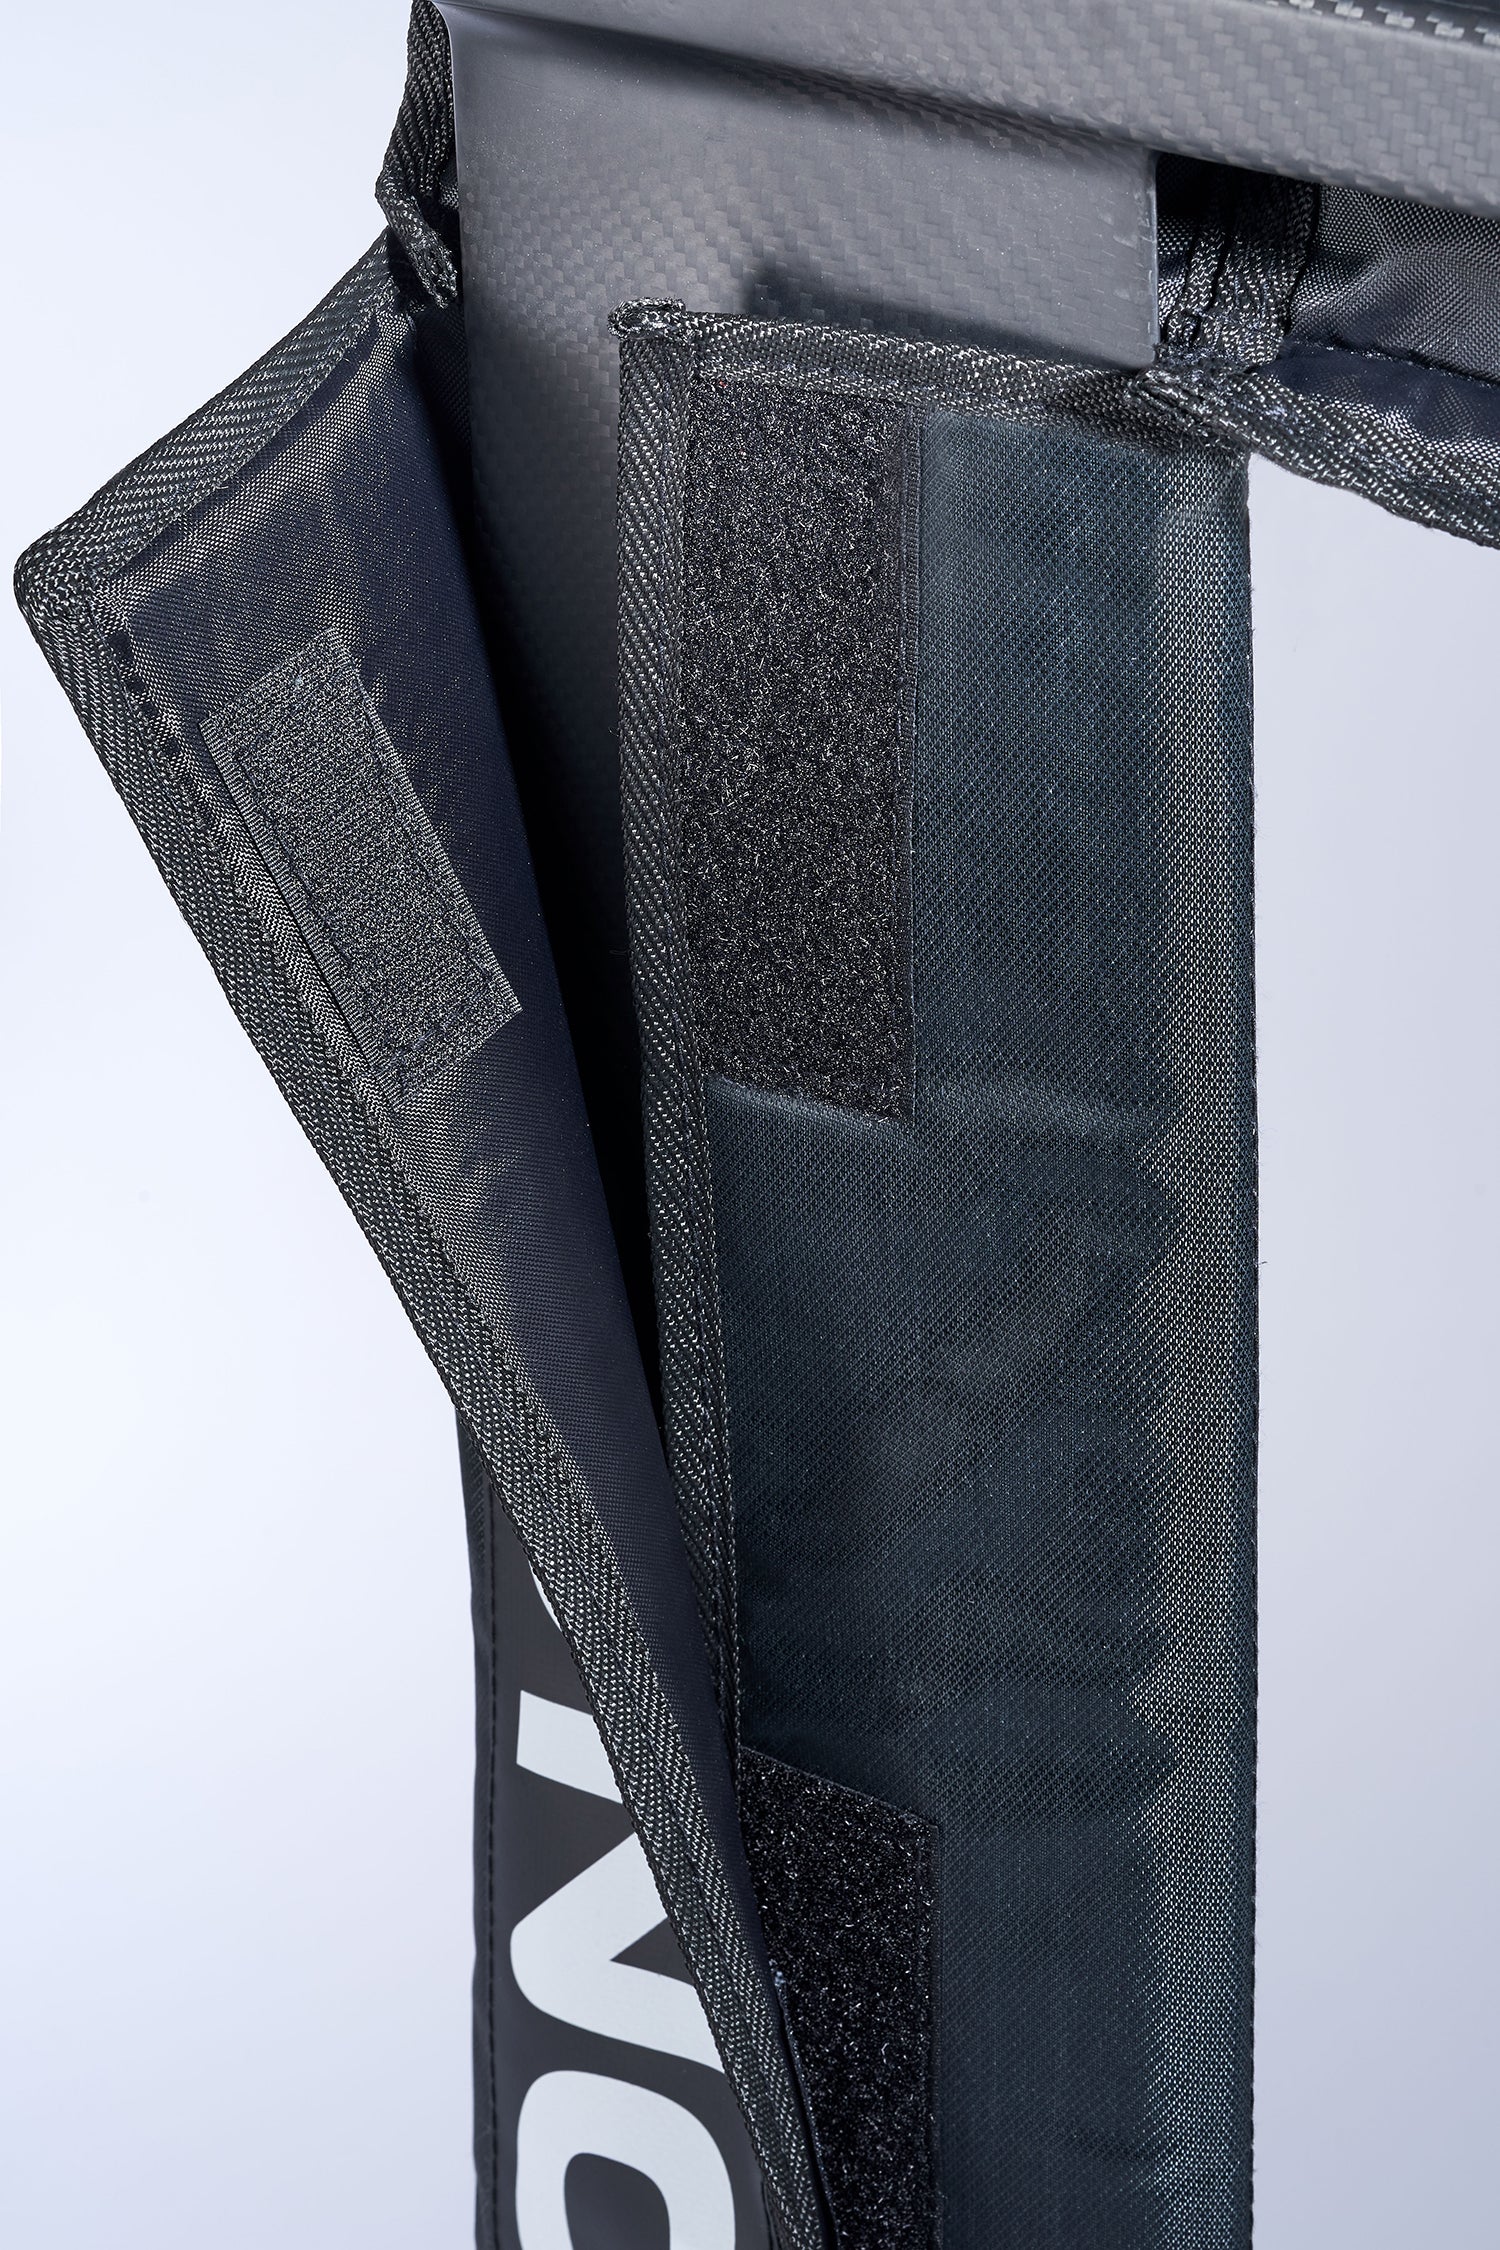 GONG | Foil Carbon Mast Cover